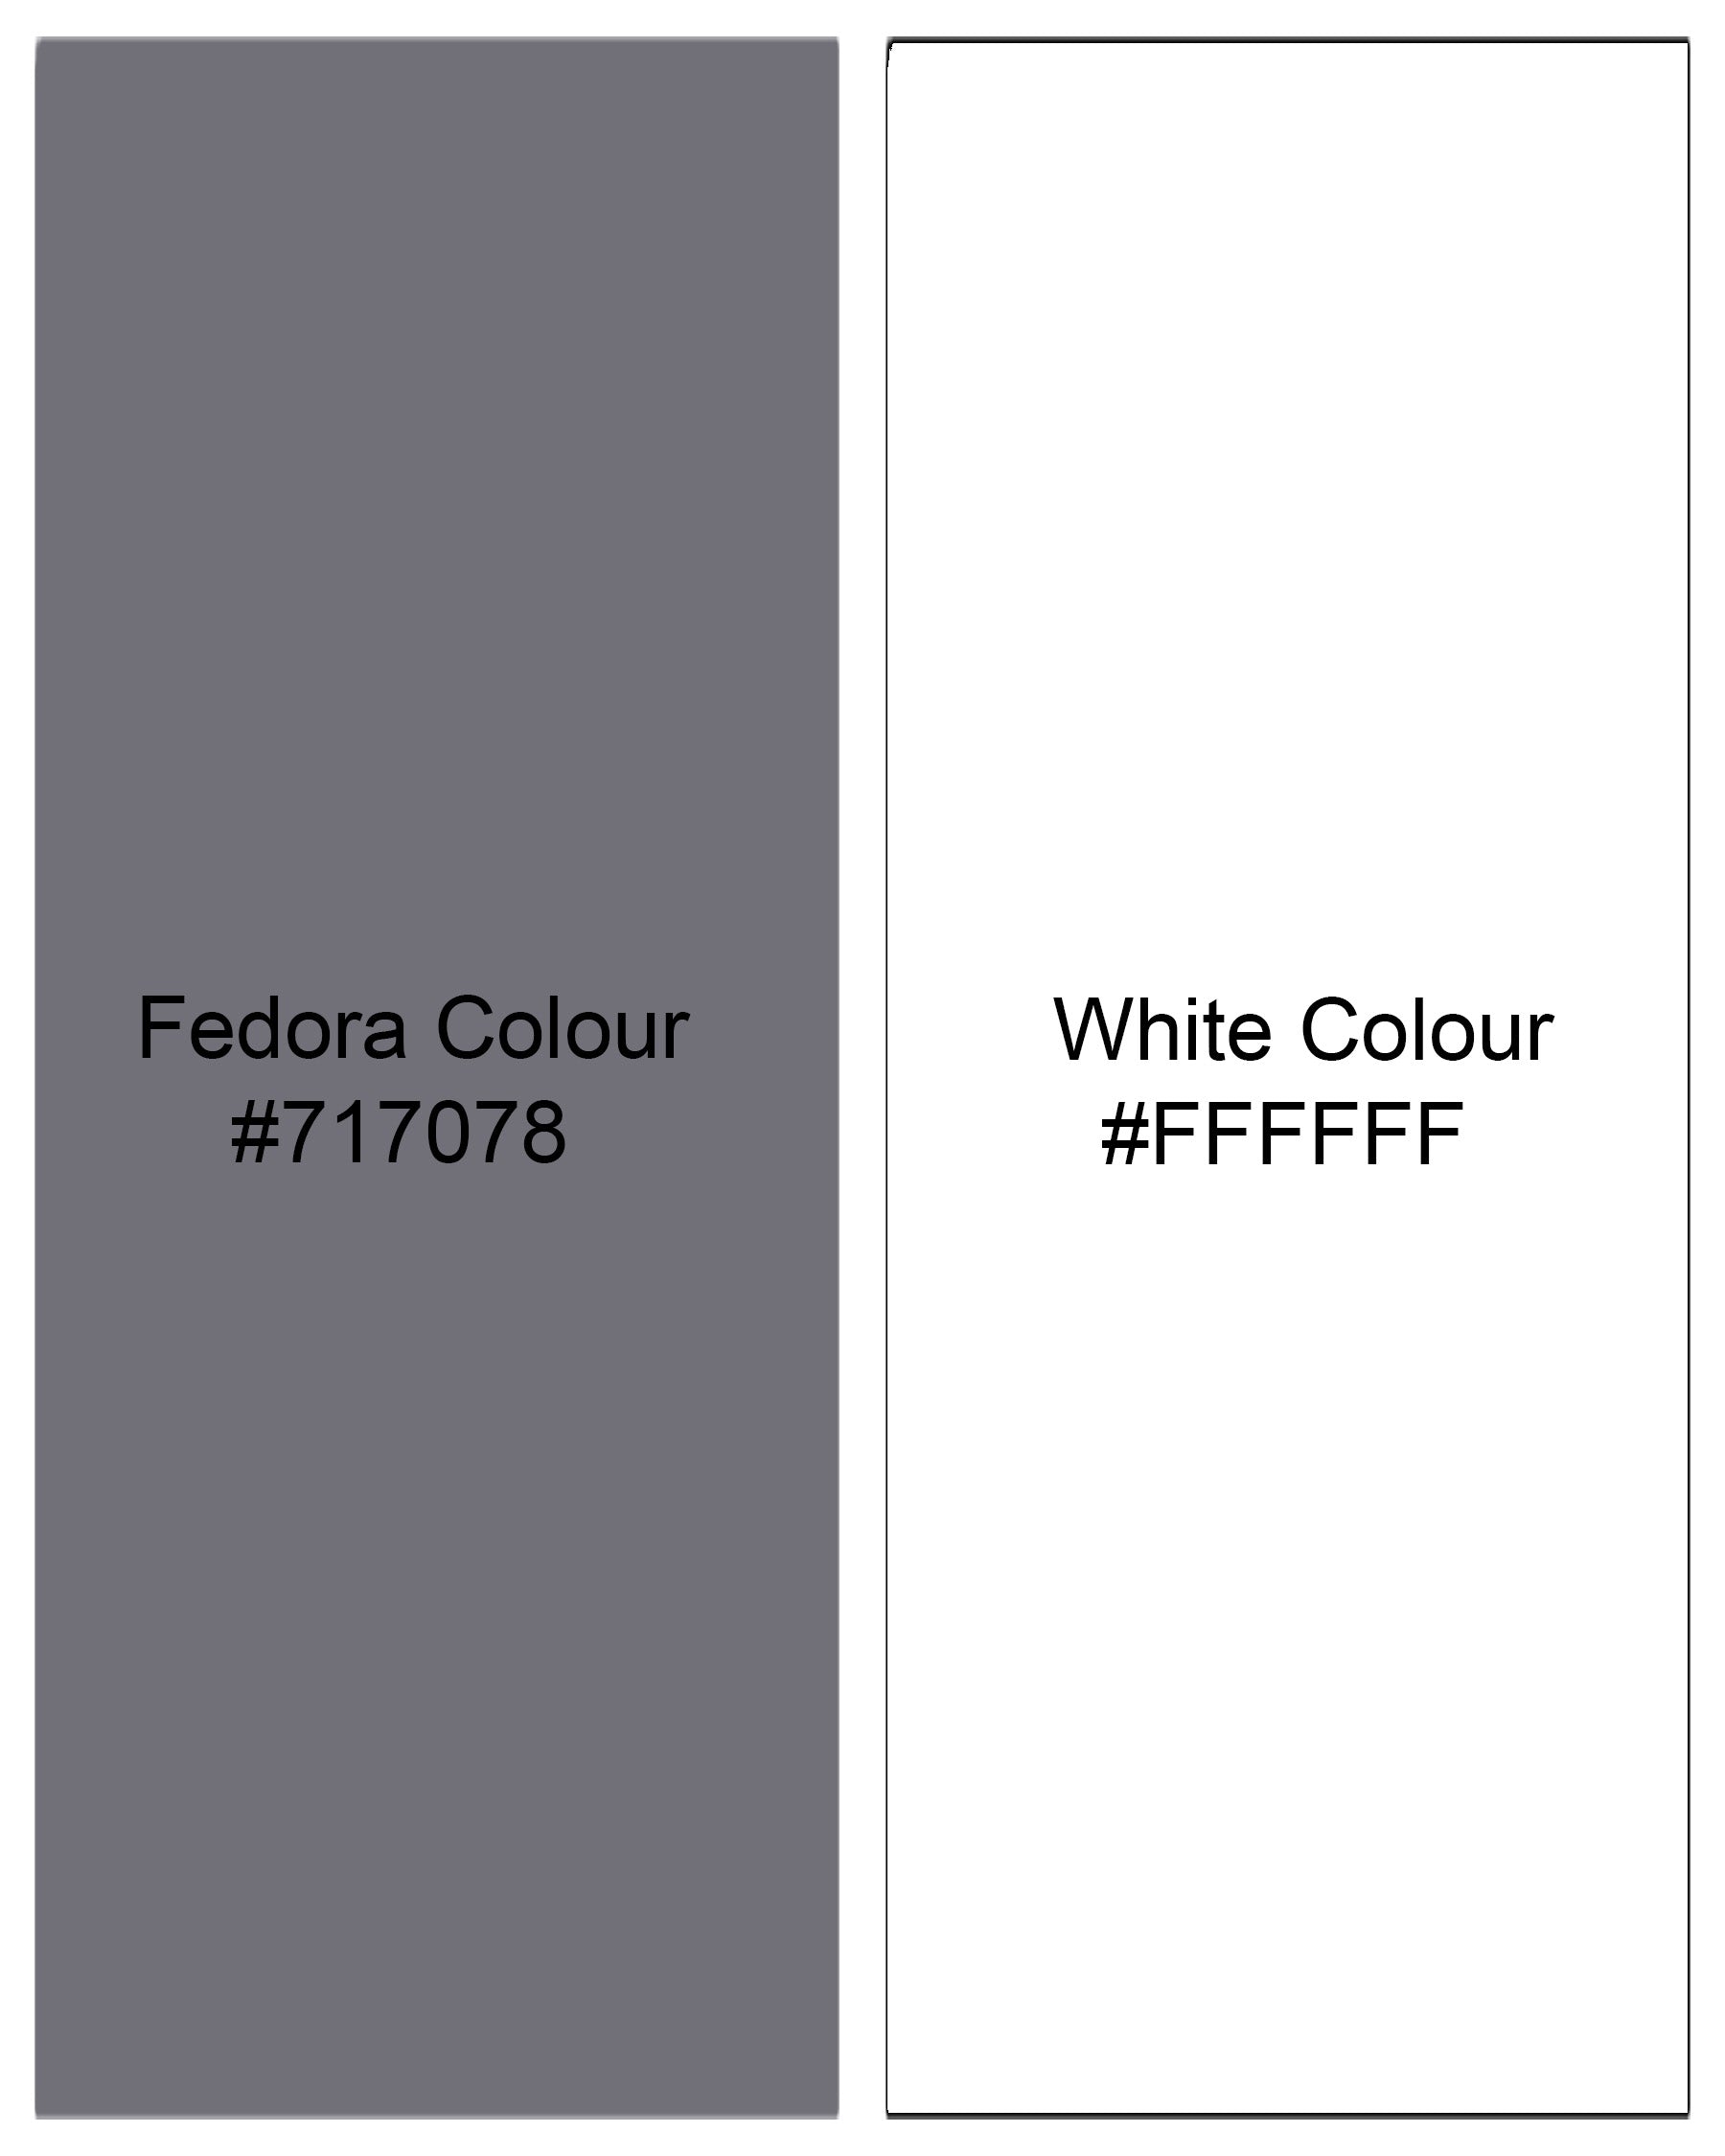 Fedora Gray and White Pinstriped Royal Oxford Shirt